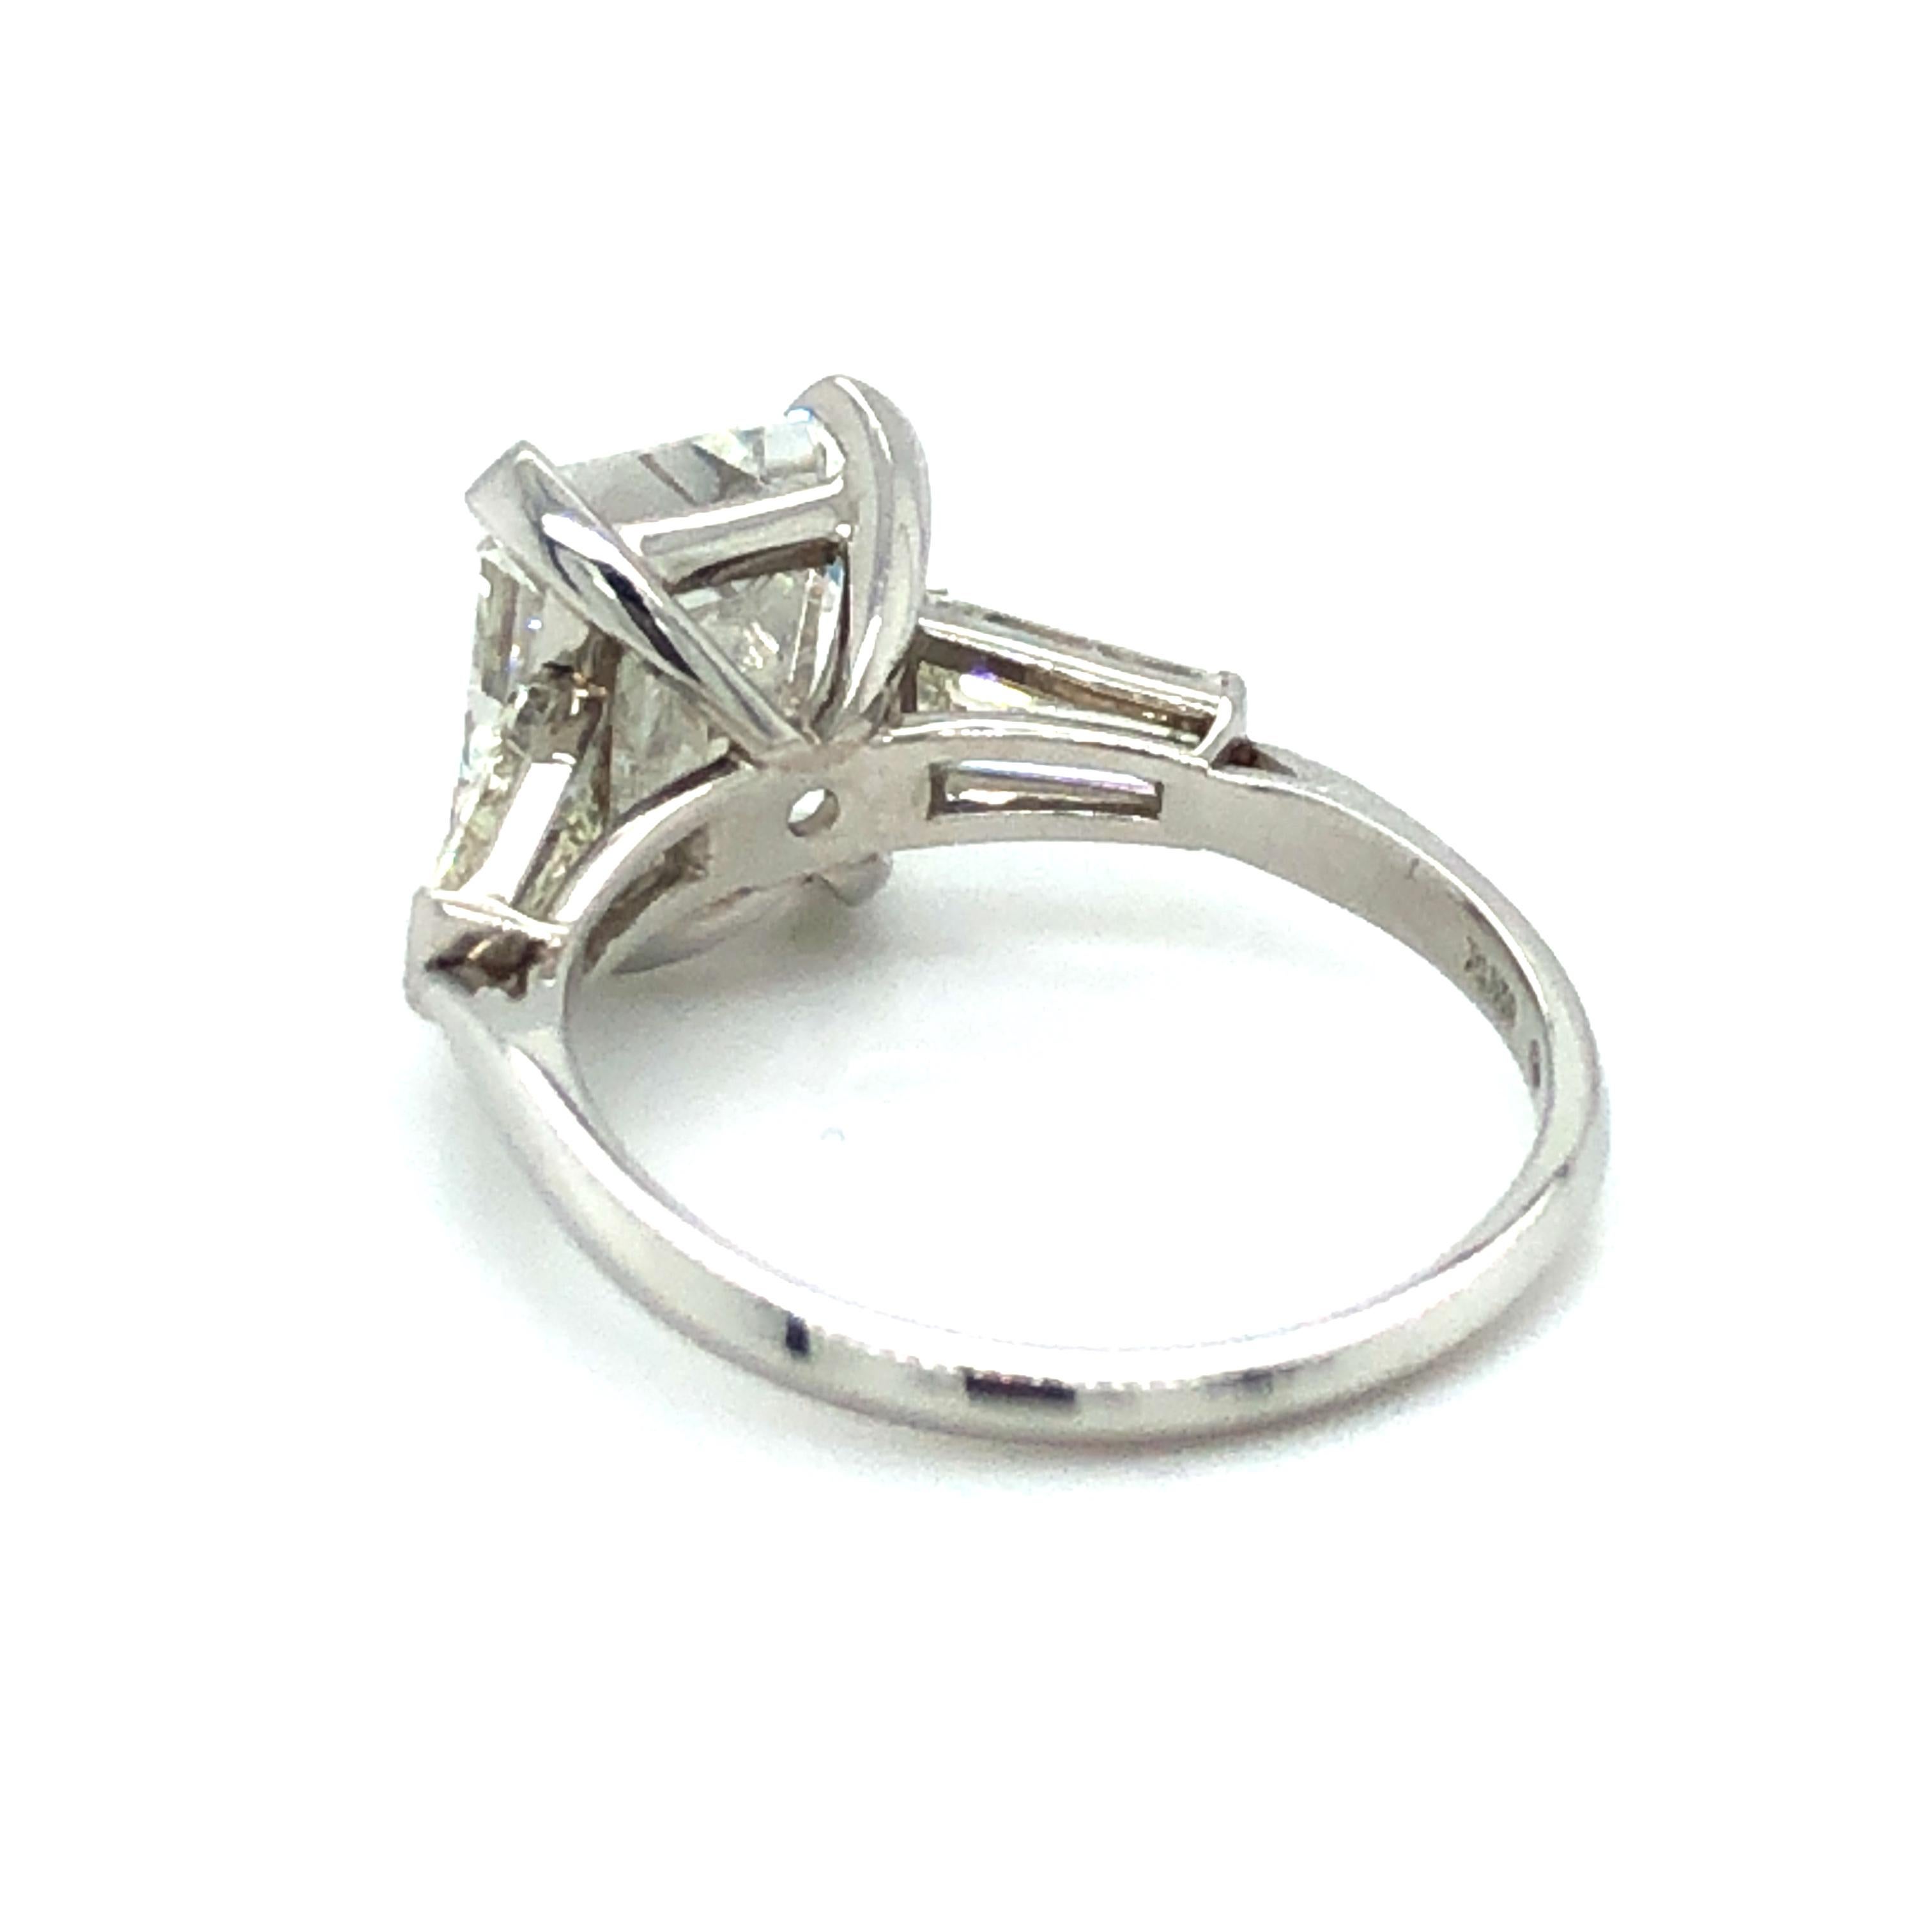 GIA Certified 4.19 Carat Emerald Cut Diamond Ring in Platinum 950 5